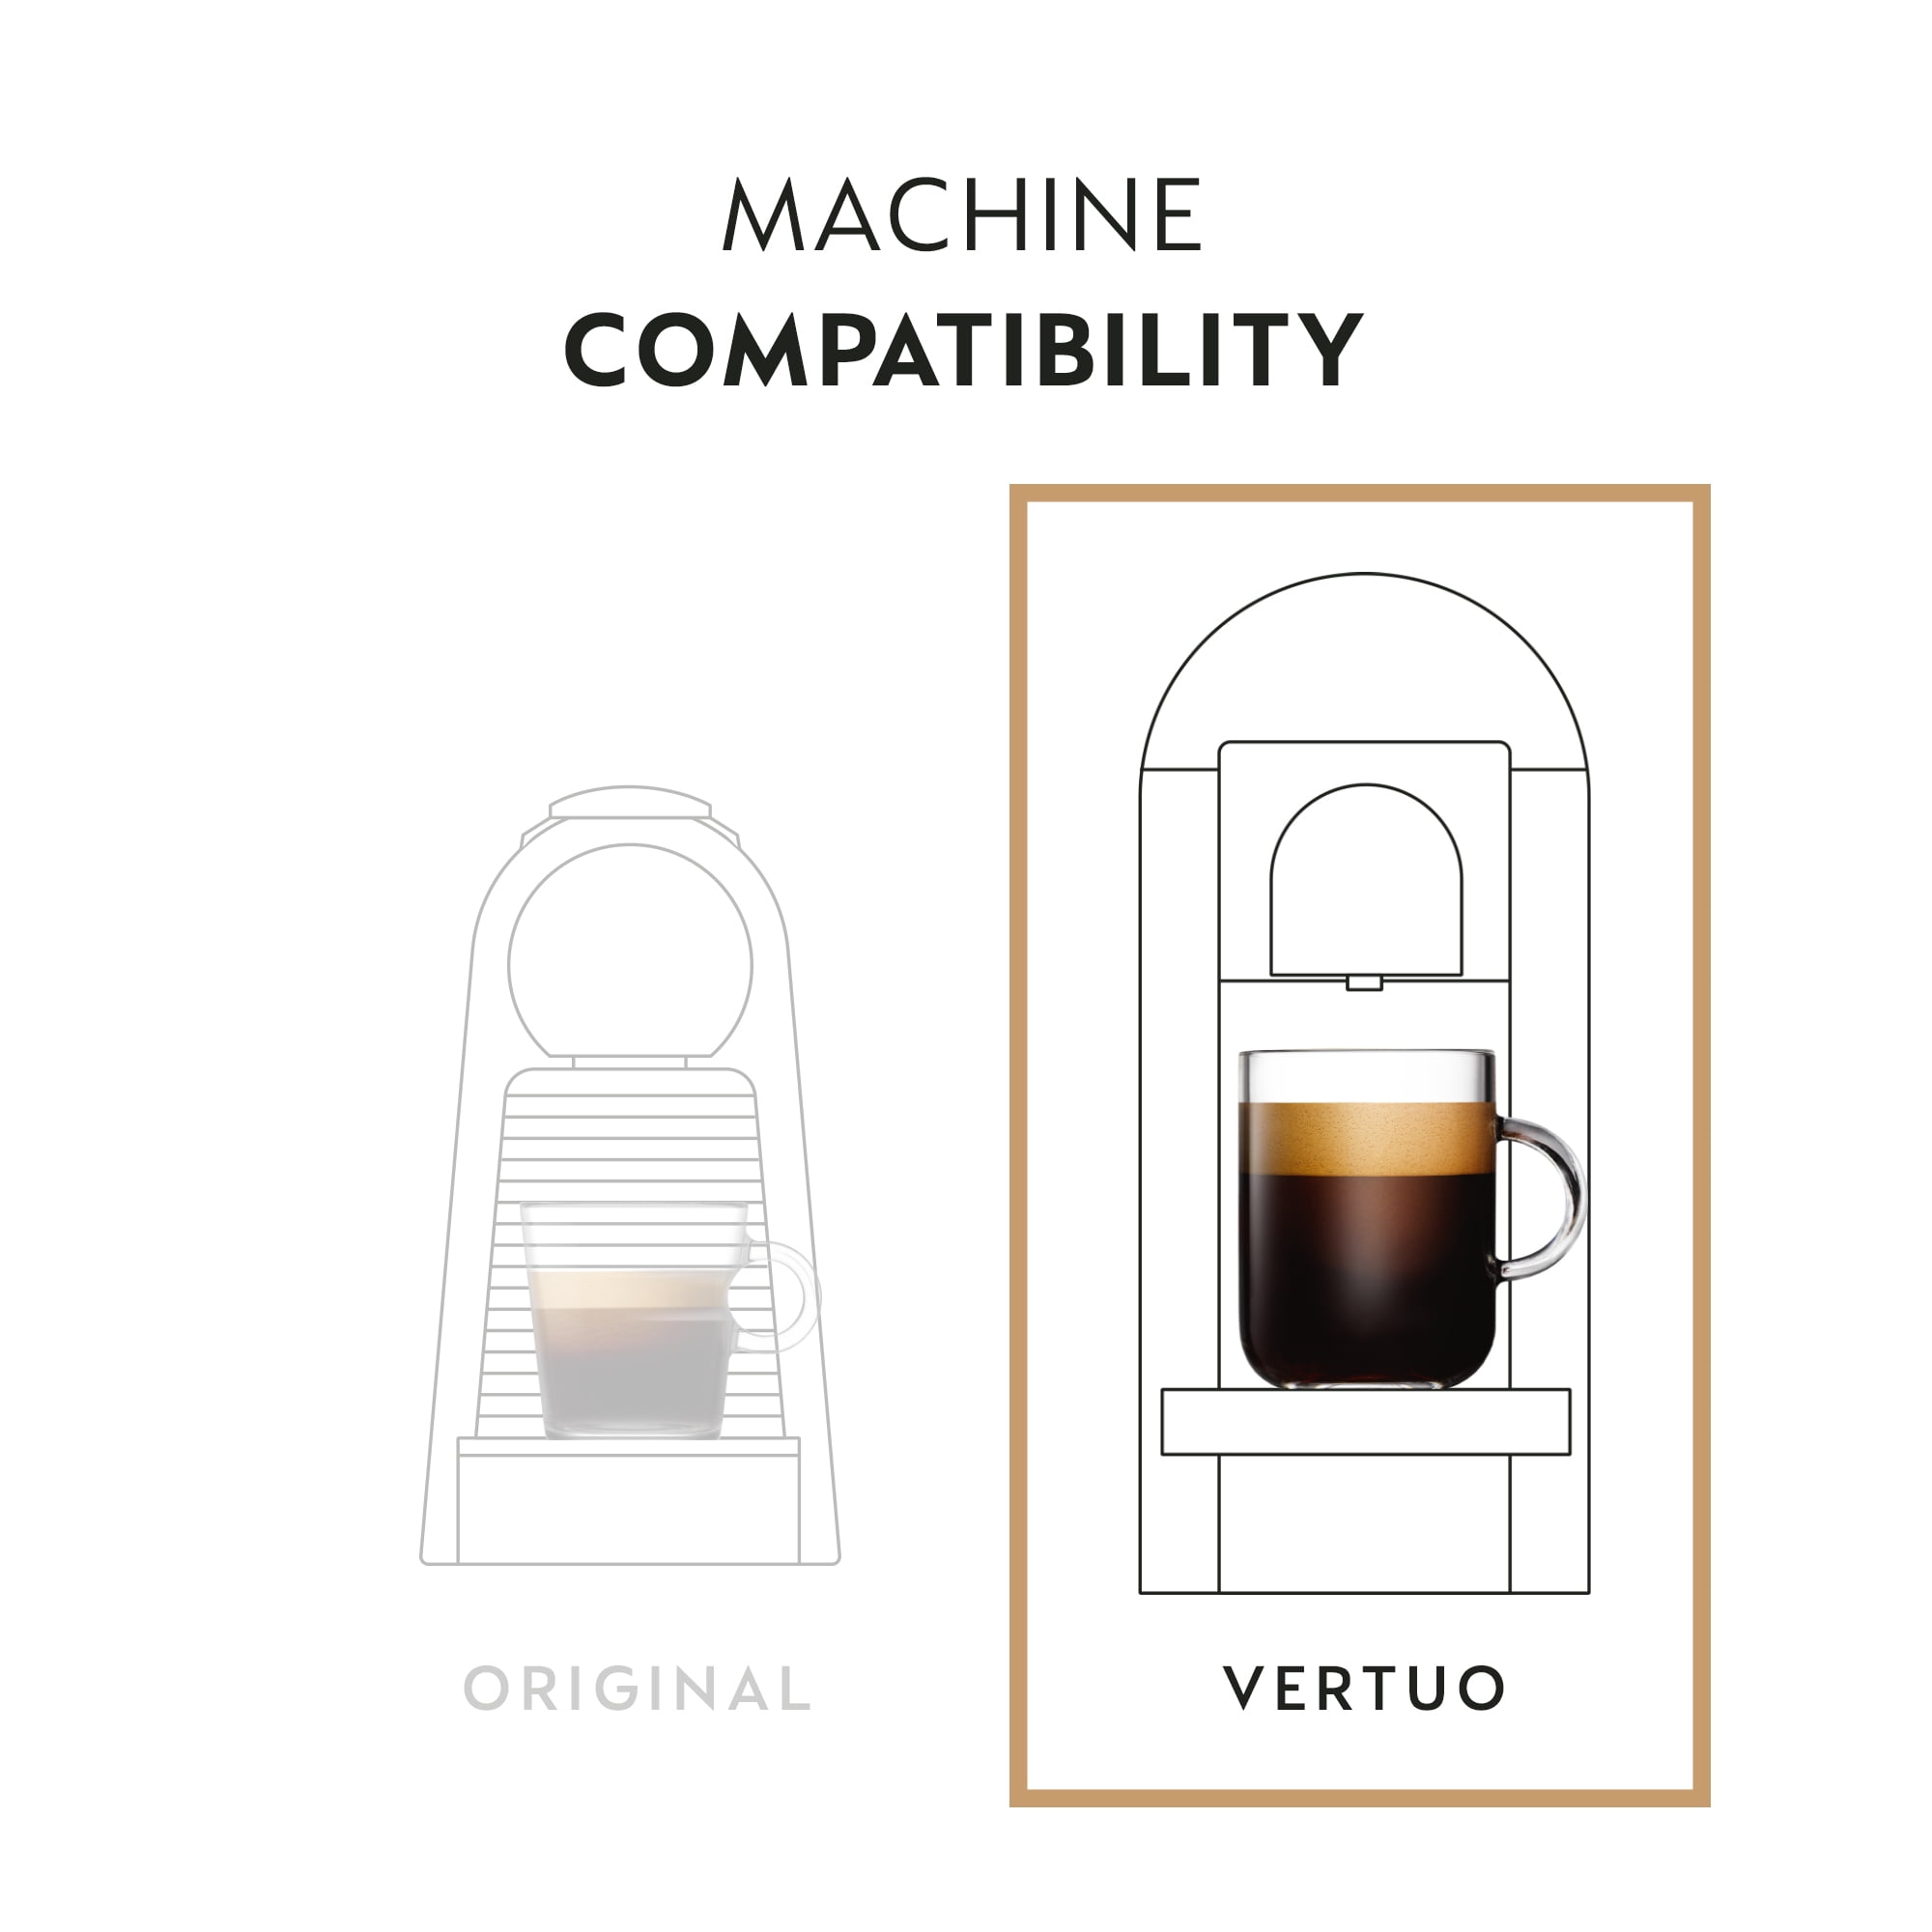 Nespresso Capsules VertuoLine, Double Espresso Chiaro, Medium